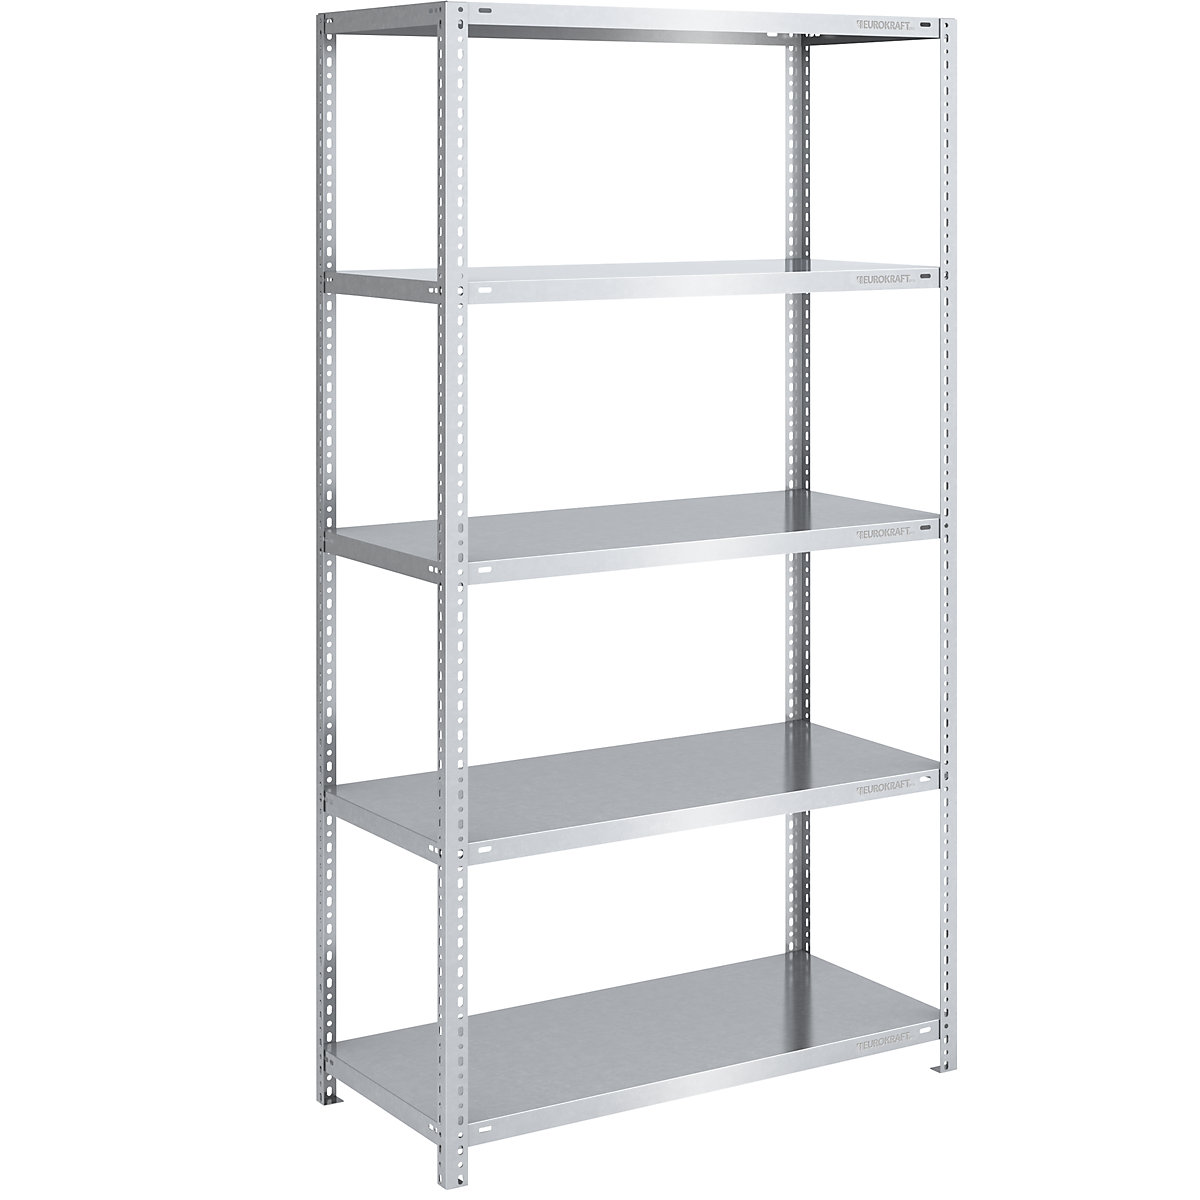 Bolt-together shelf unit, light duty, zinc plated – eurokraft pro, shelf unit height 2000 mm, shelf width 1000 mm, depth 600 mm, standard shelf unit-11